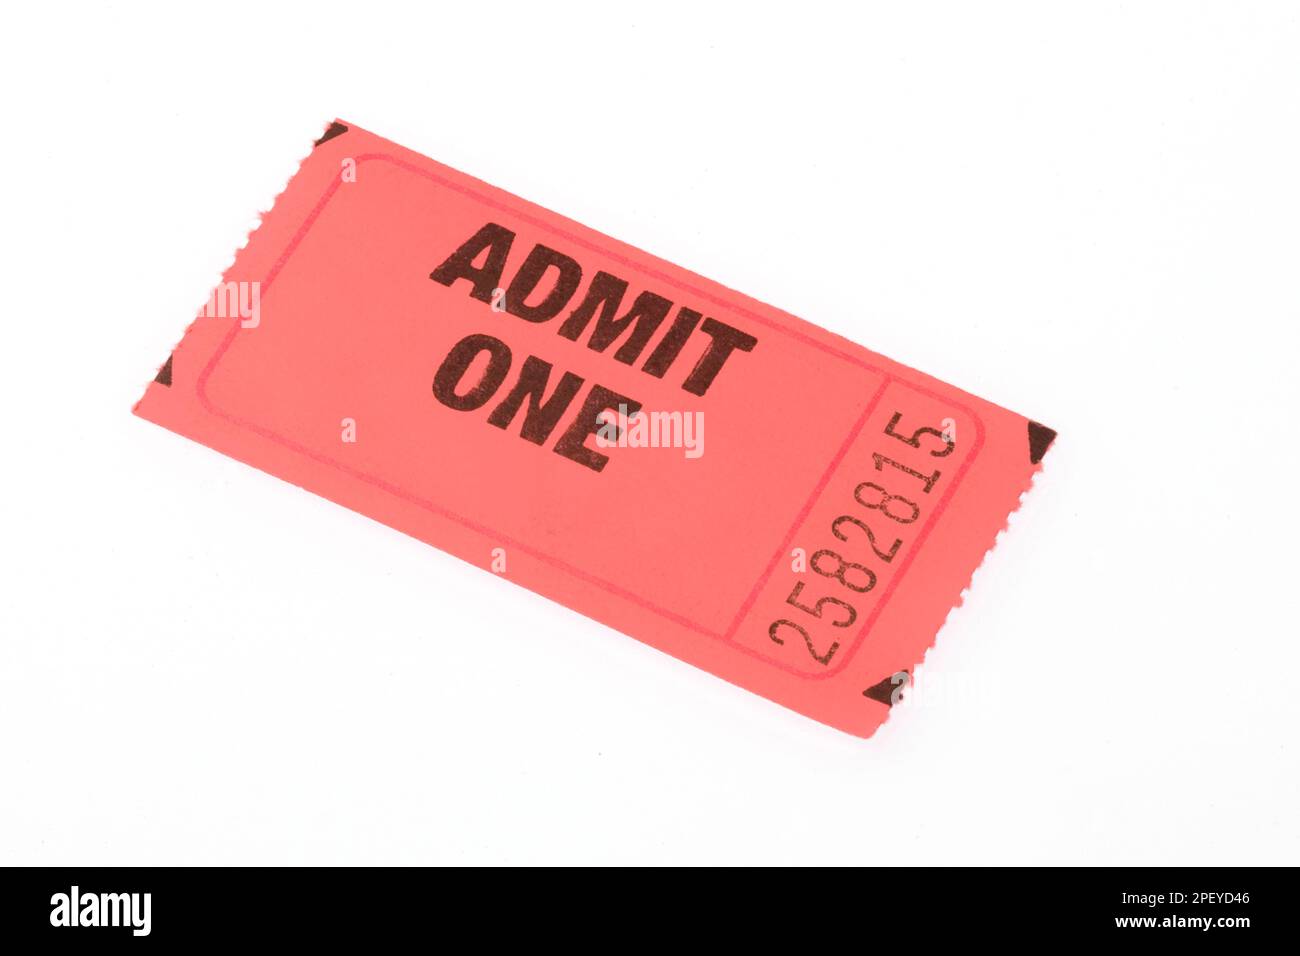 theatre, amusement ride, or event ticket, Stock Photo